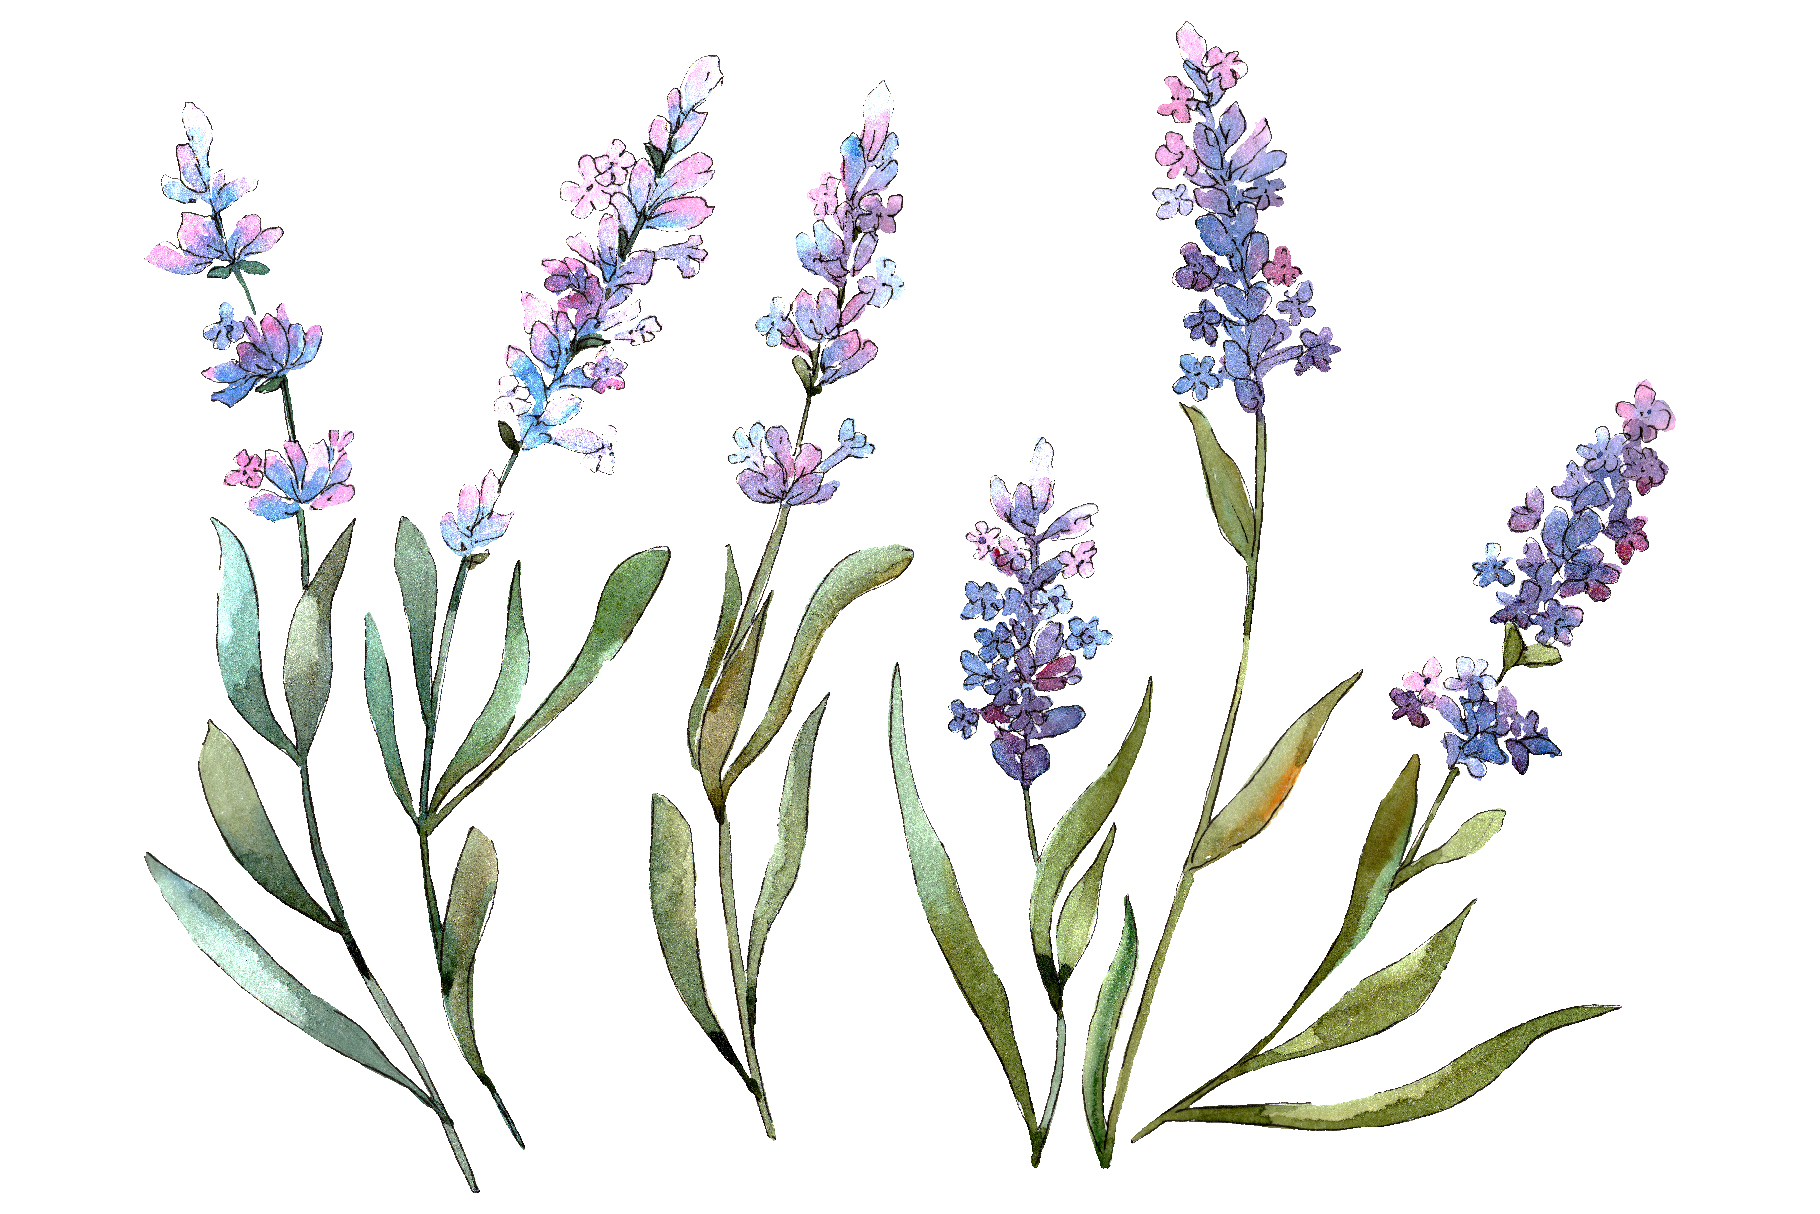 lavender clipart watercolor